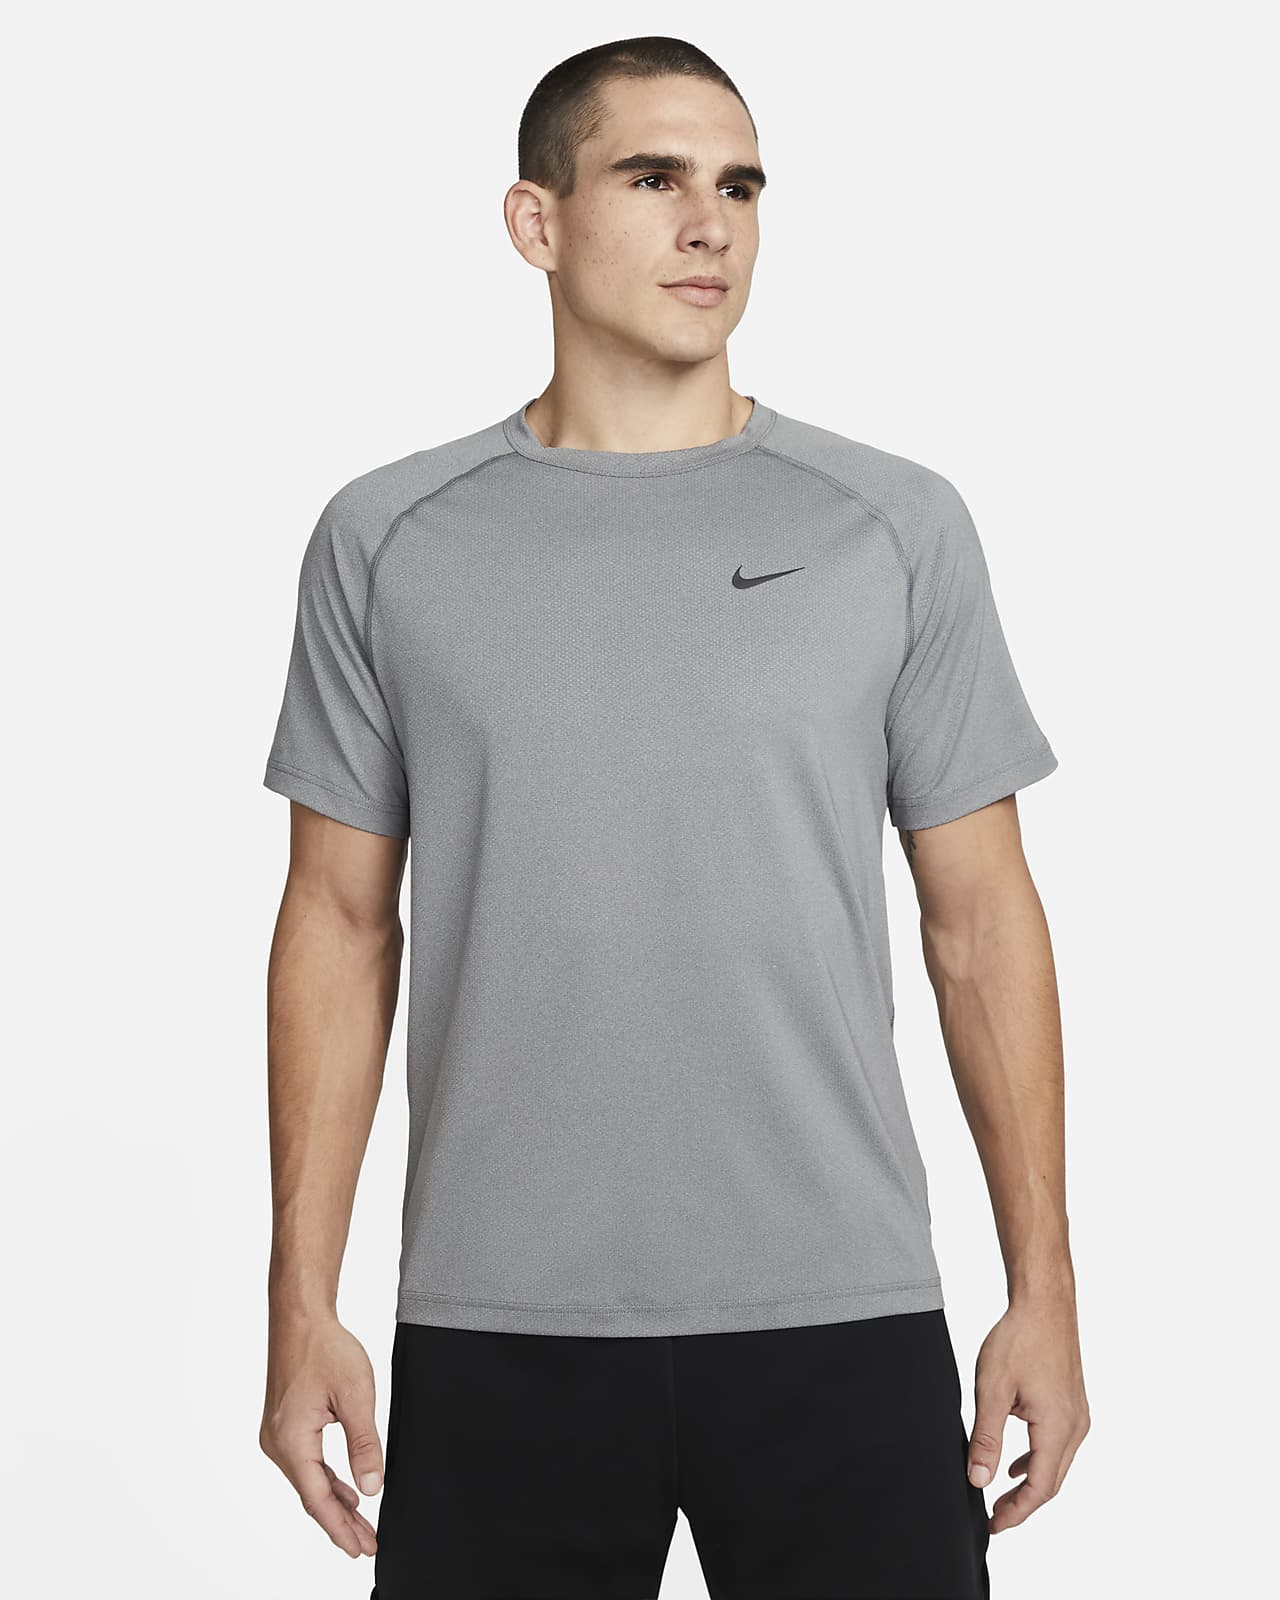 Nike Ready Dri-FIT Kısa Kollu Erkek Fitness Üstü